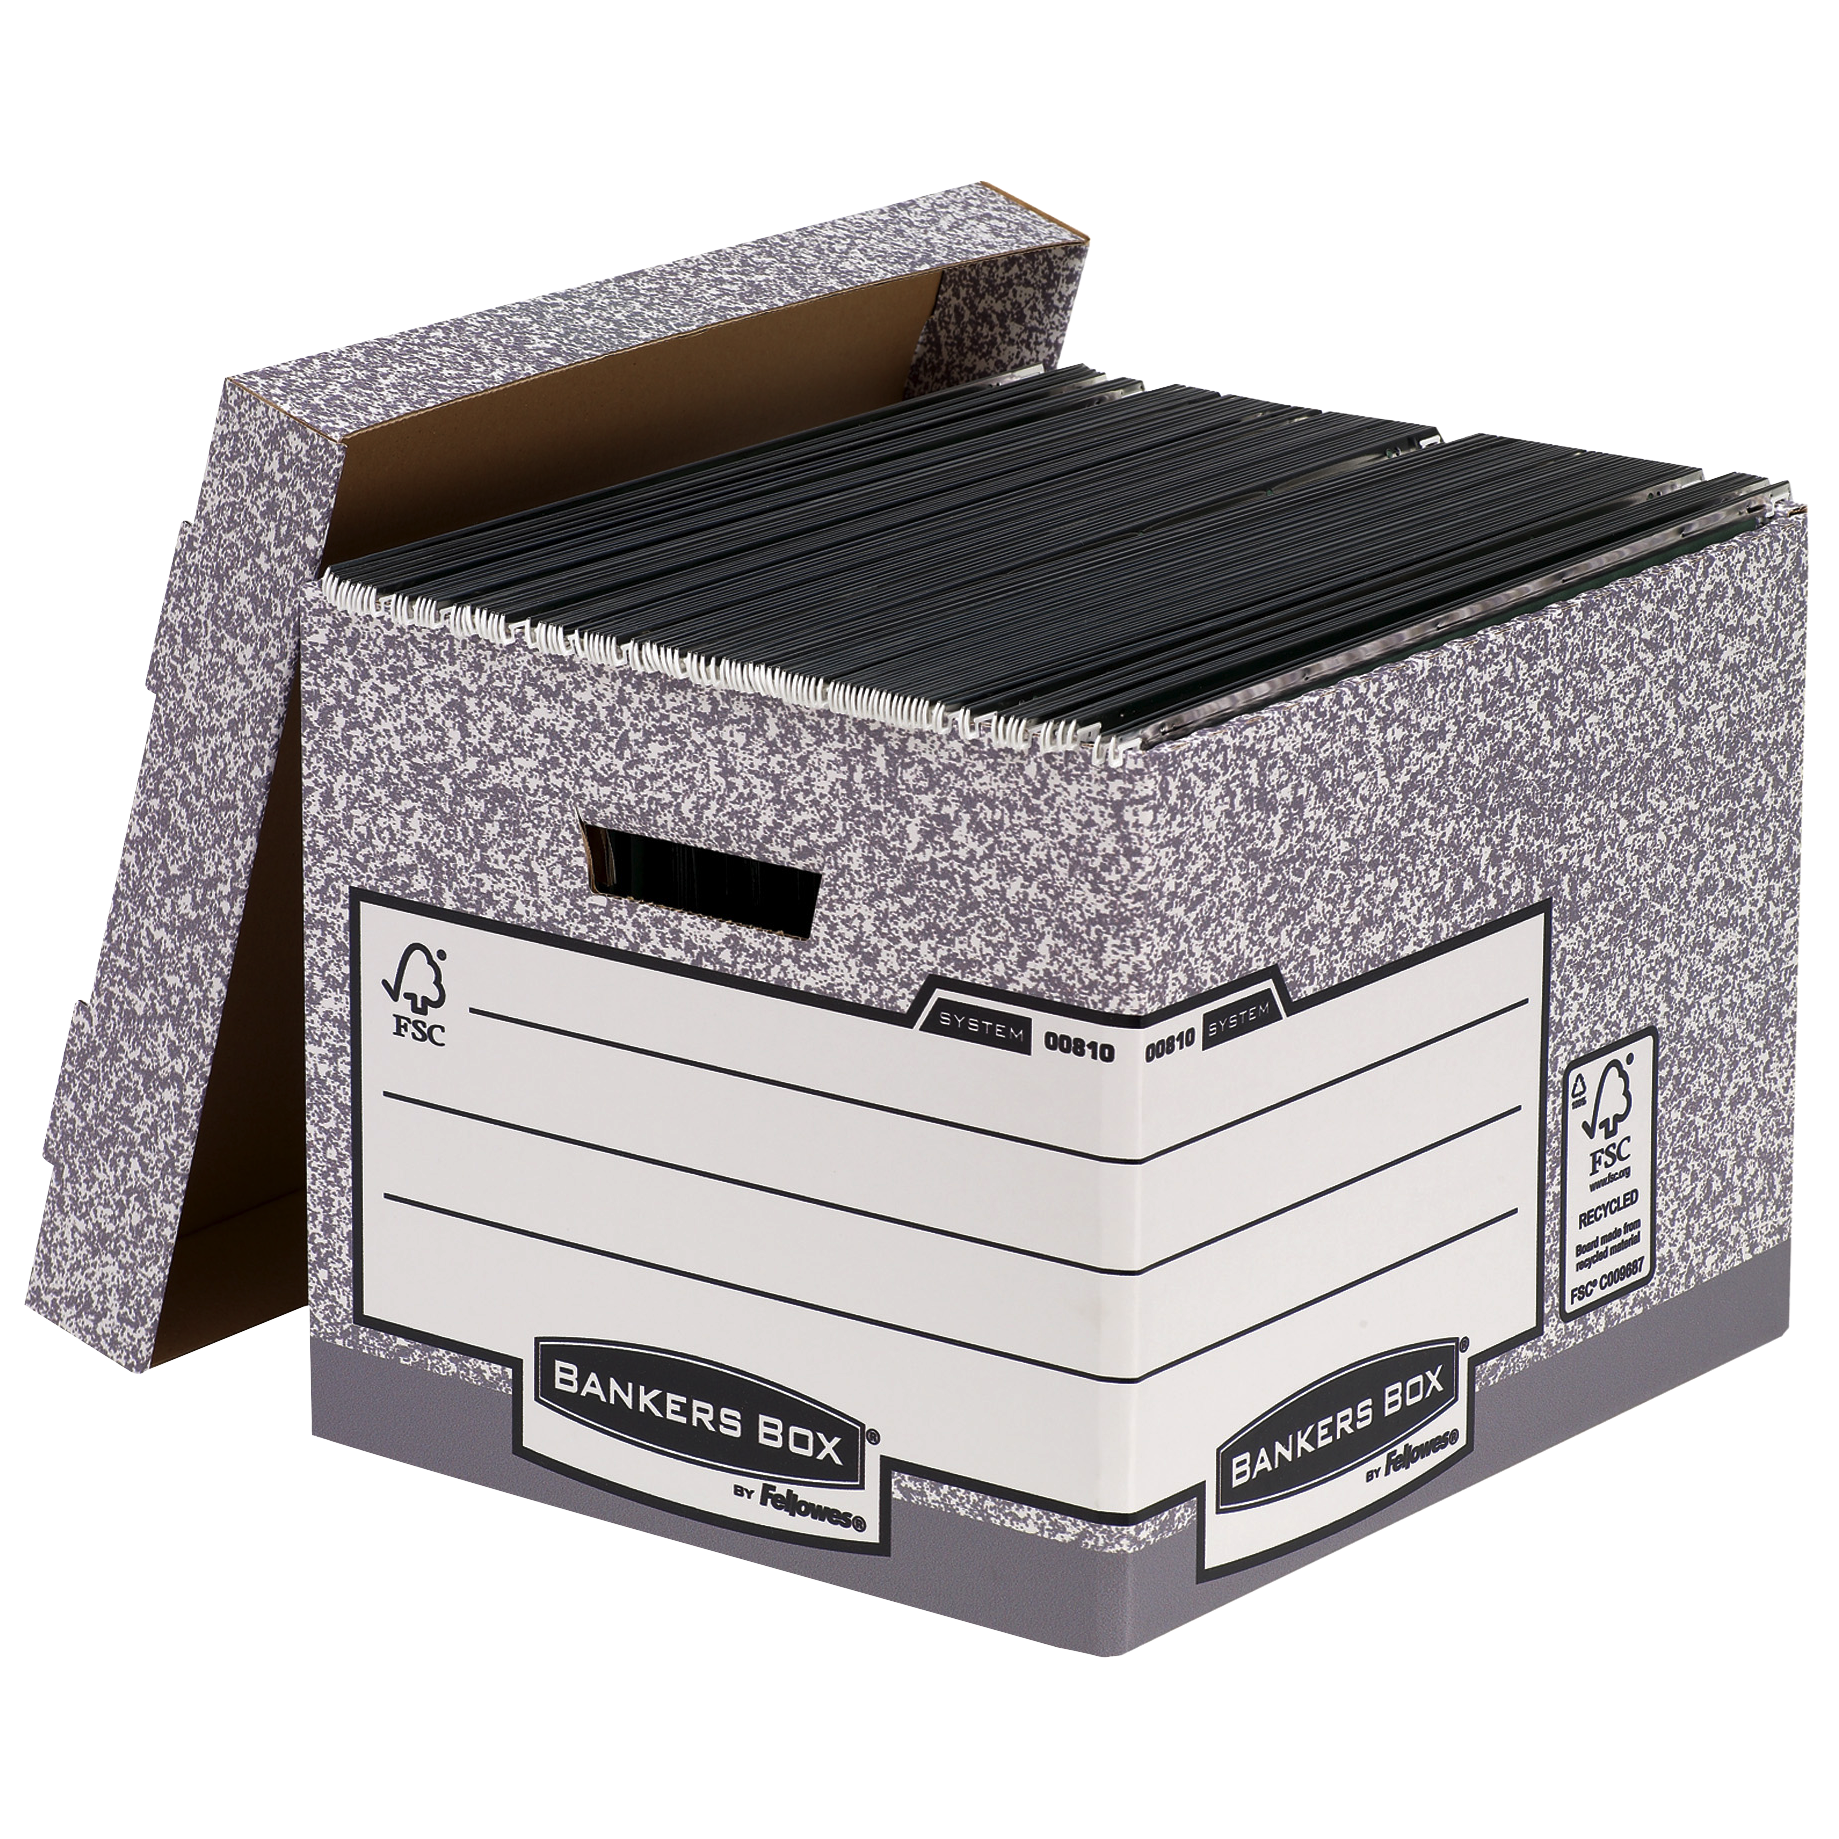 System Standard Archivbox